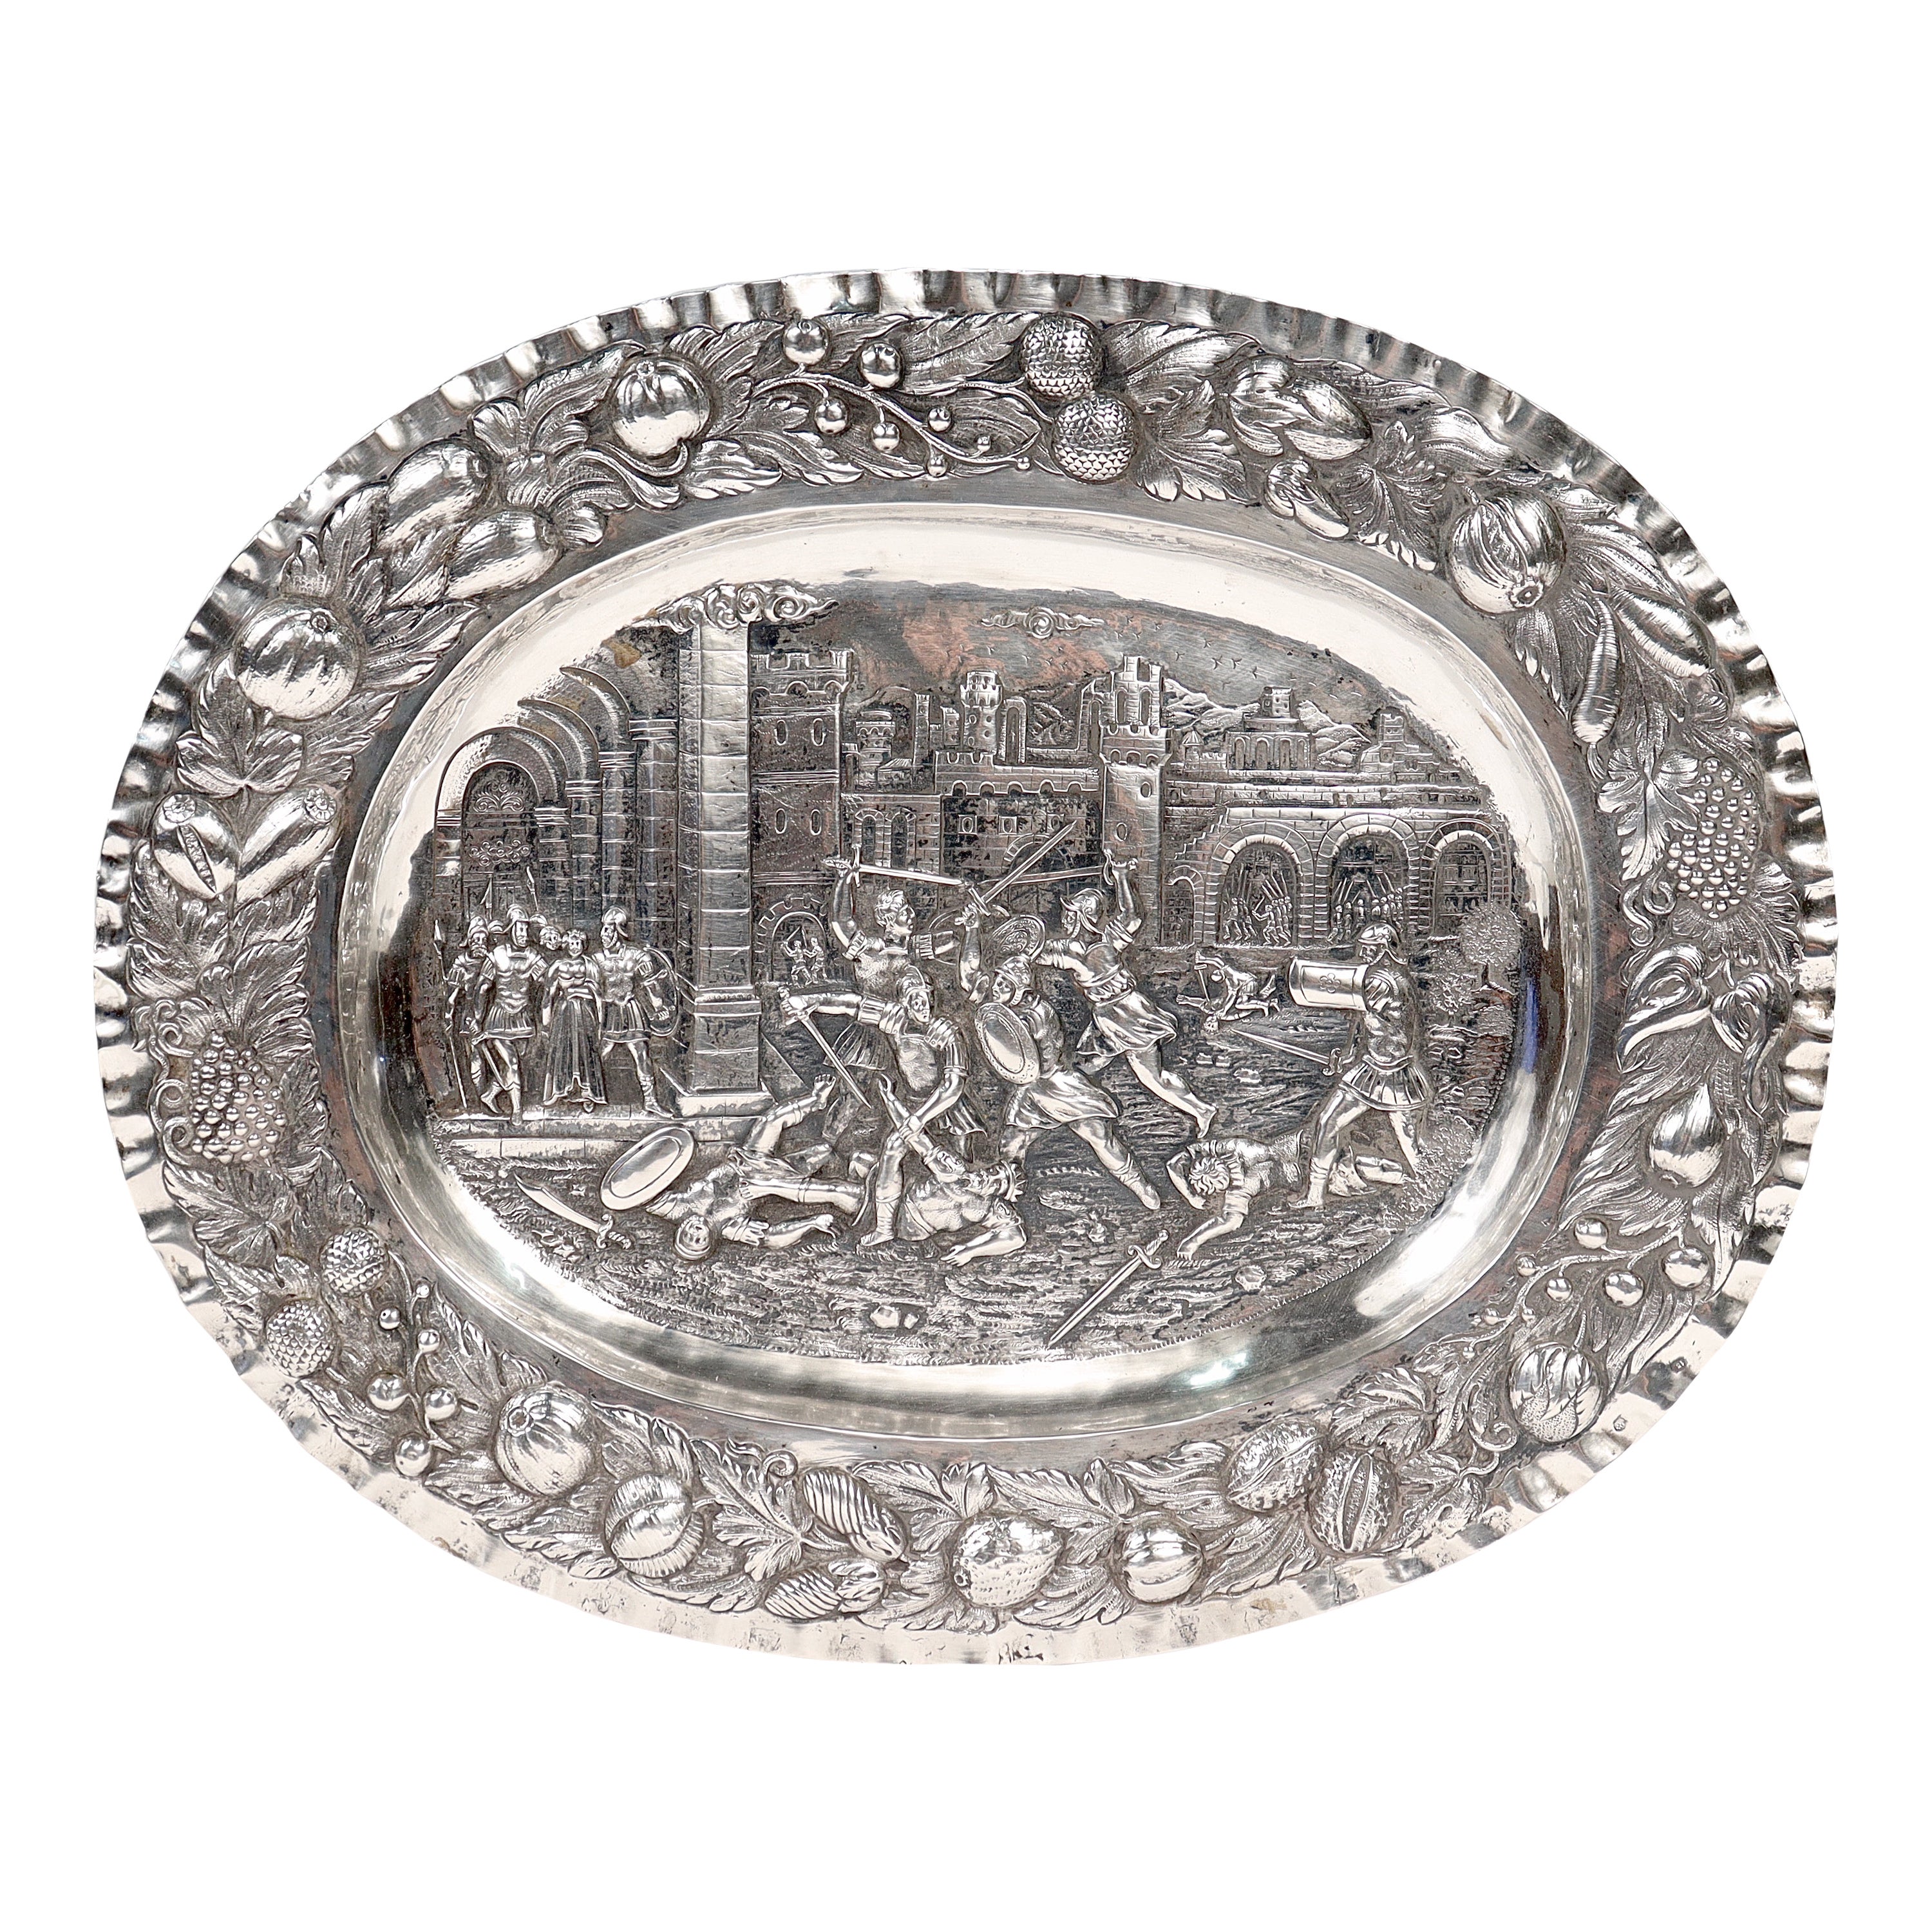 Antikes deutsches Repousse-Tablett oder Platzteller aus massivem 800er Silber im Renaissance-Revival-Stil